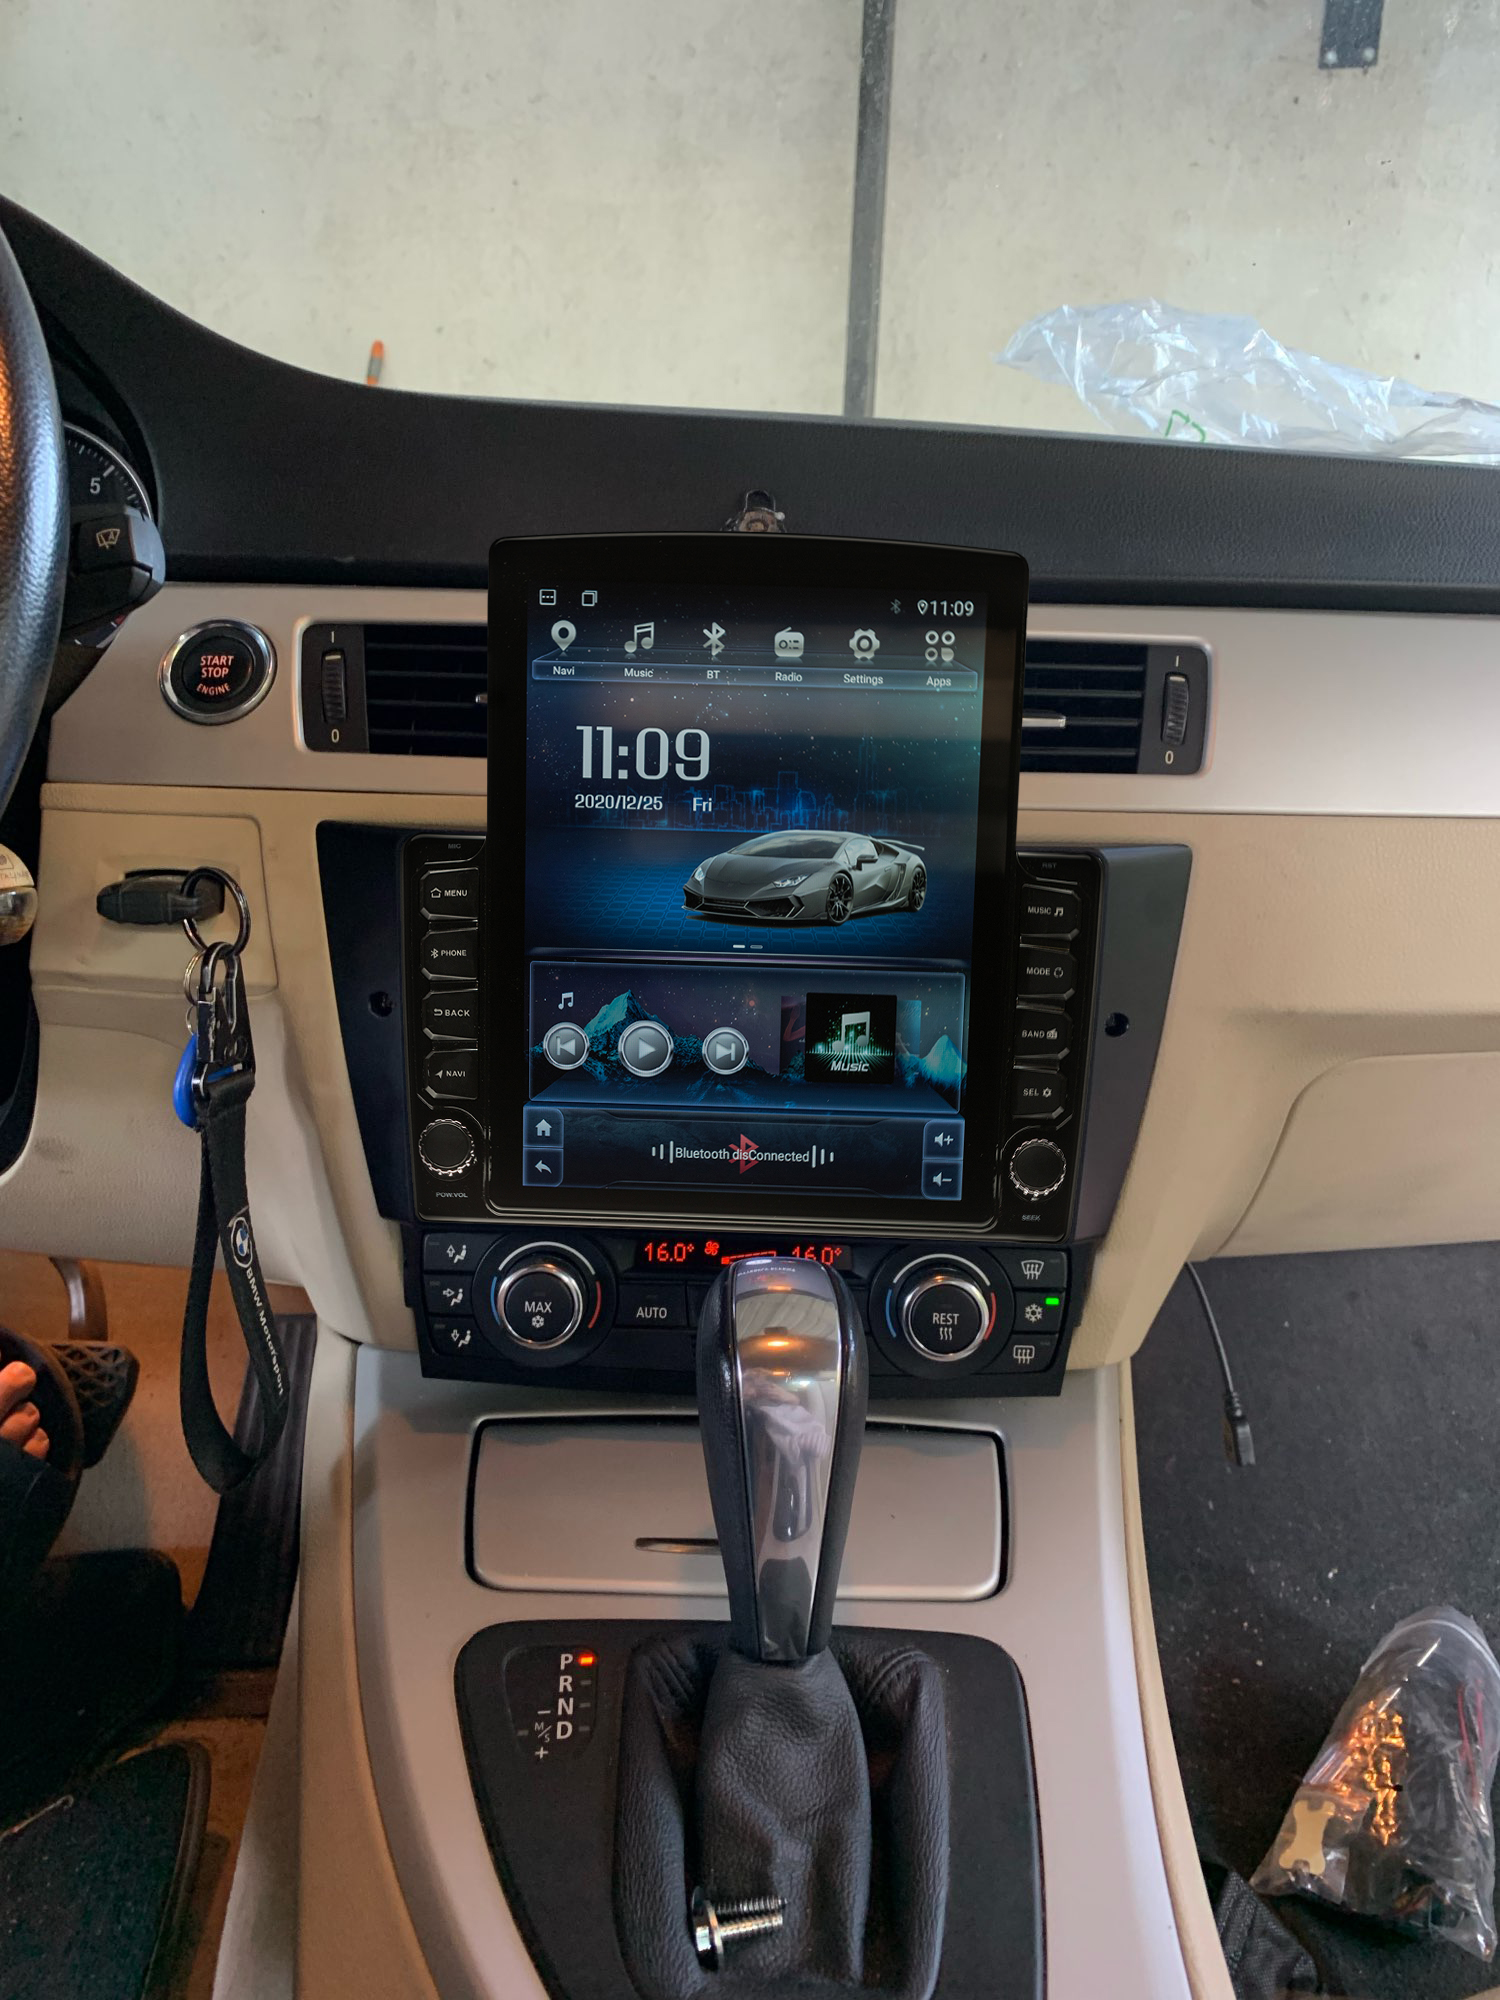 Navigatie AUTONAV ECO Android GPS Dedicata BMW Seria 3 E90, Model XPERT Memorie 16GB Stocare, 1GB DDR3 RAM, Display Vertical Stil Tesla 10" Full-Touch, WiFi, 2 x USB, Bluetooth, Quad-Core 4 * 1.3GHz, 4 * 50W Audio